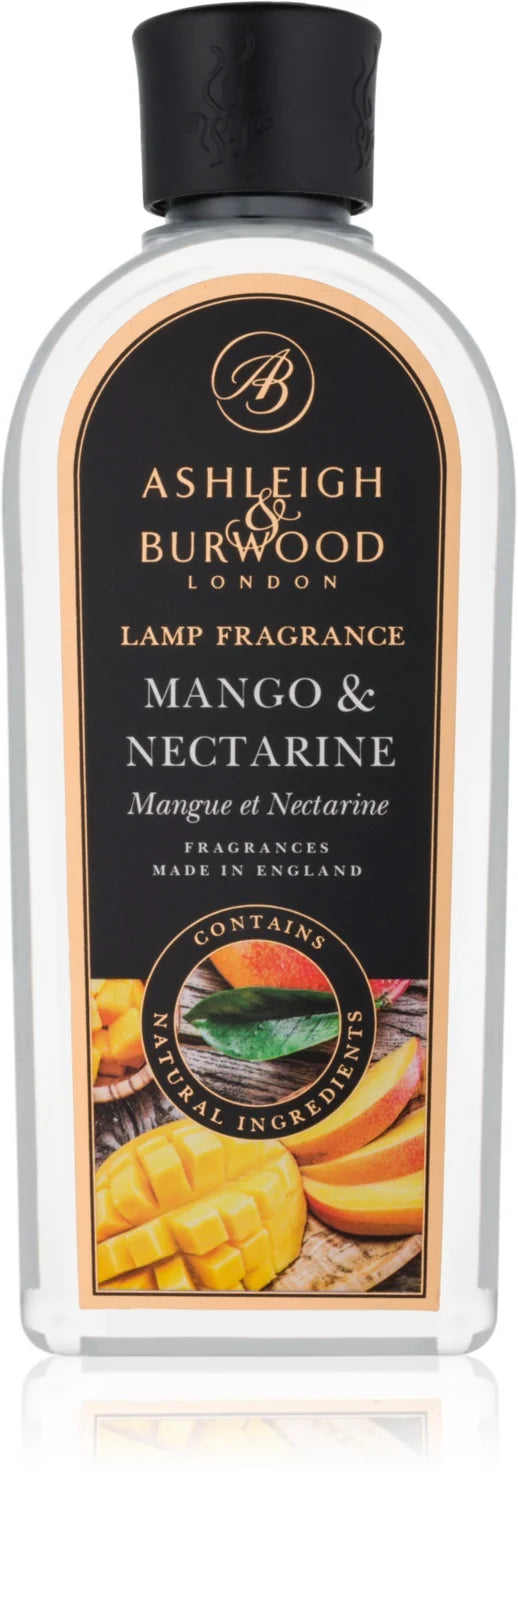 Lamp Fragance Mango & Nectarine - Centro de Estética Itziar y Mariángeles